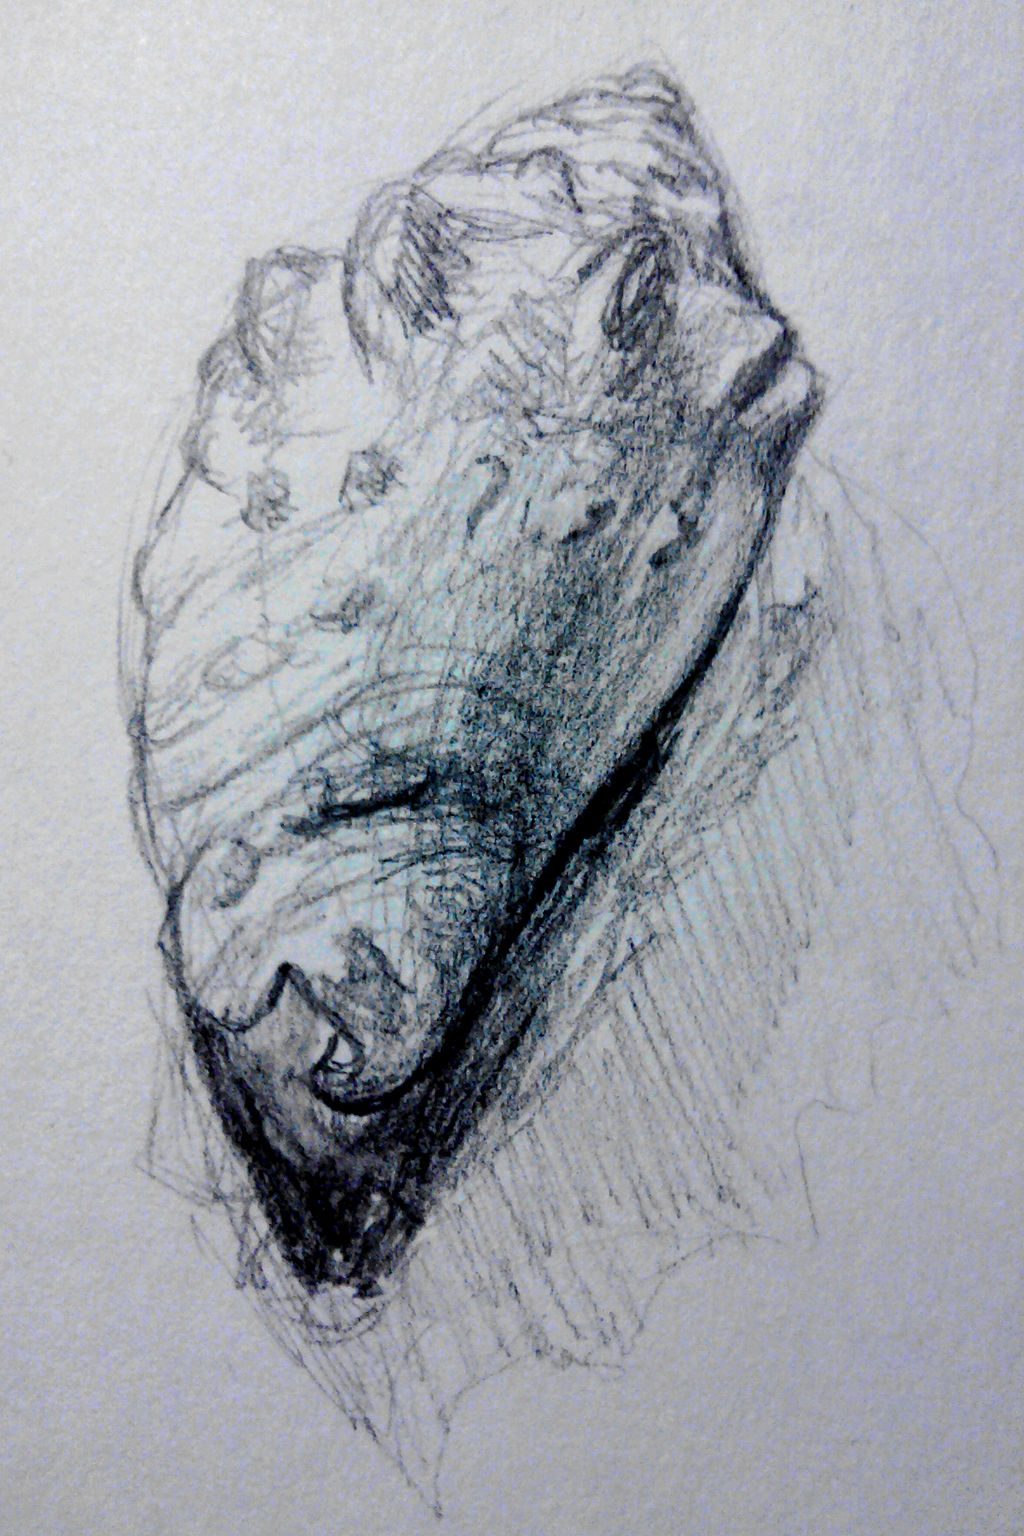 Pencil sketch. A seashell